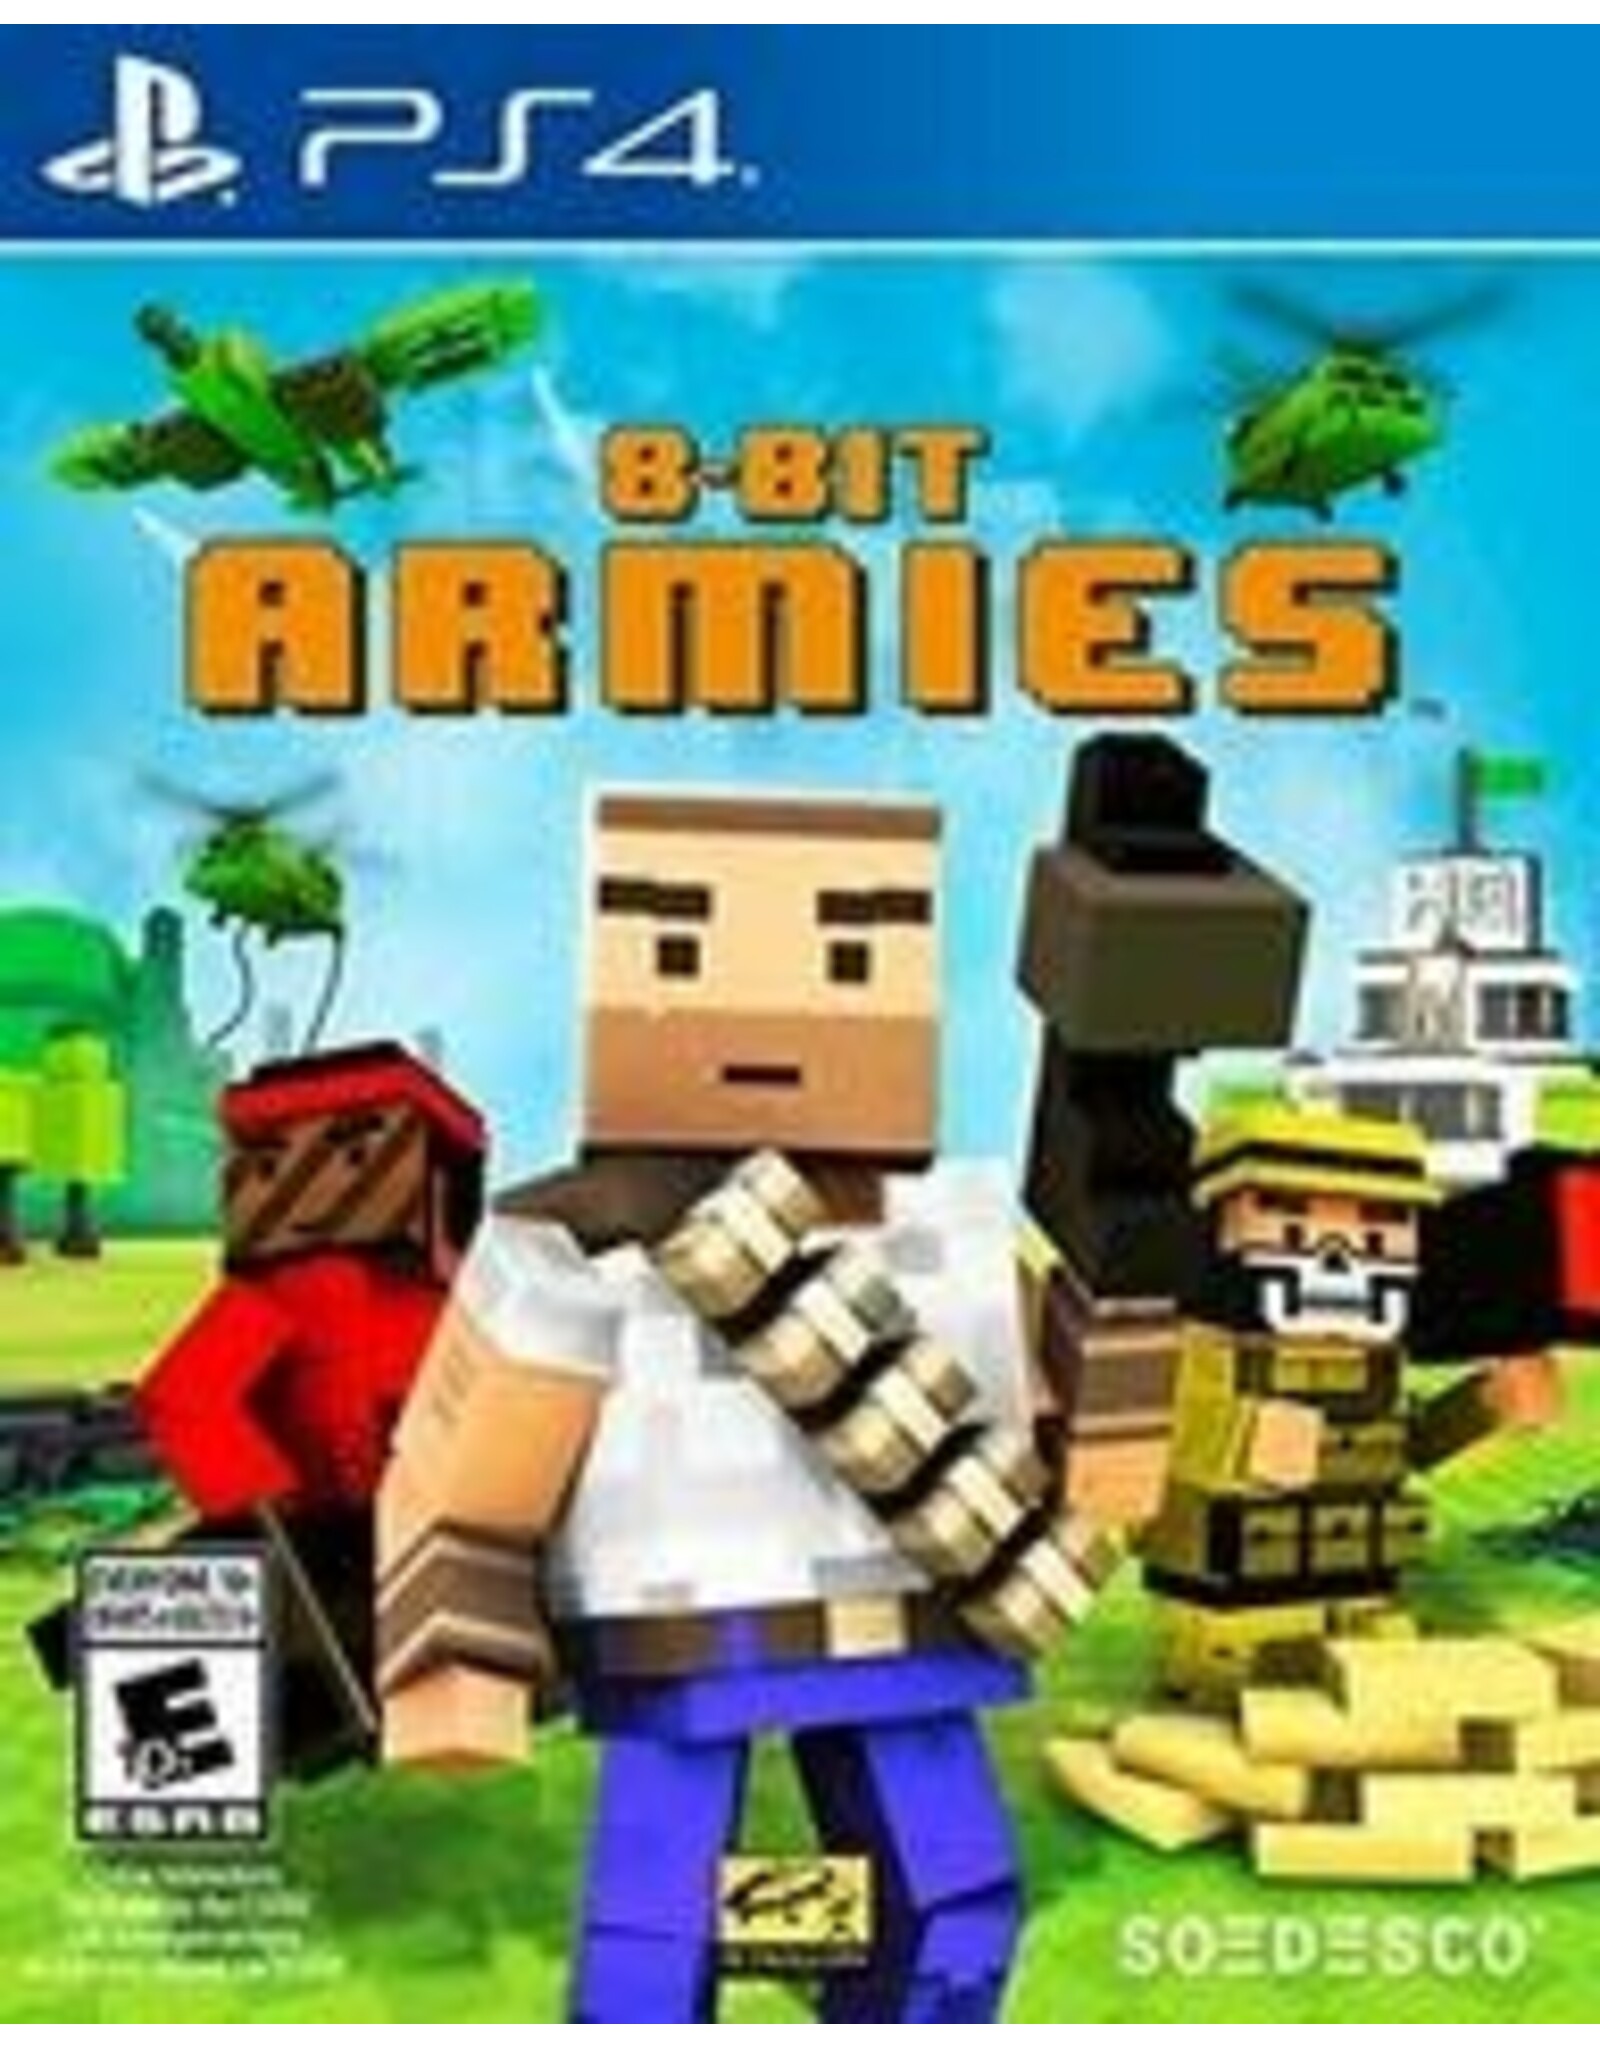 Playstation 4 8-Bit Armies (CiB)